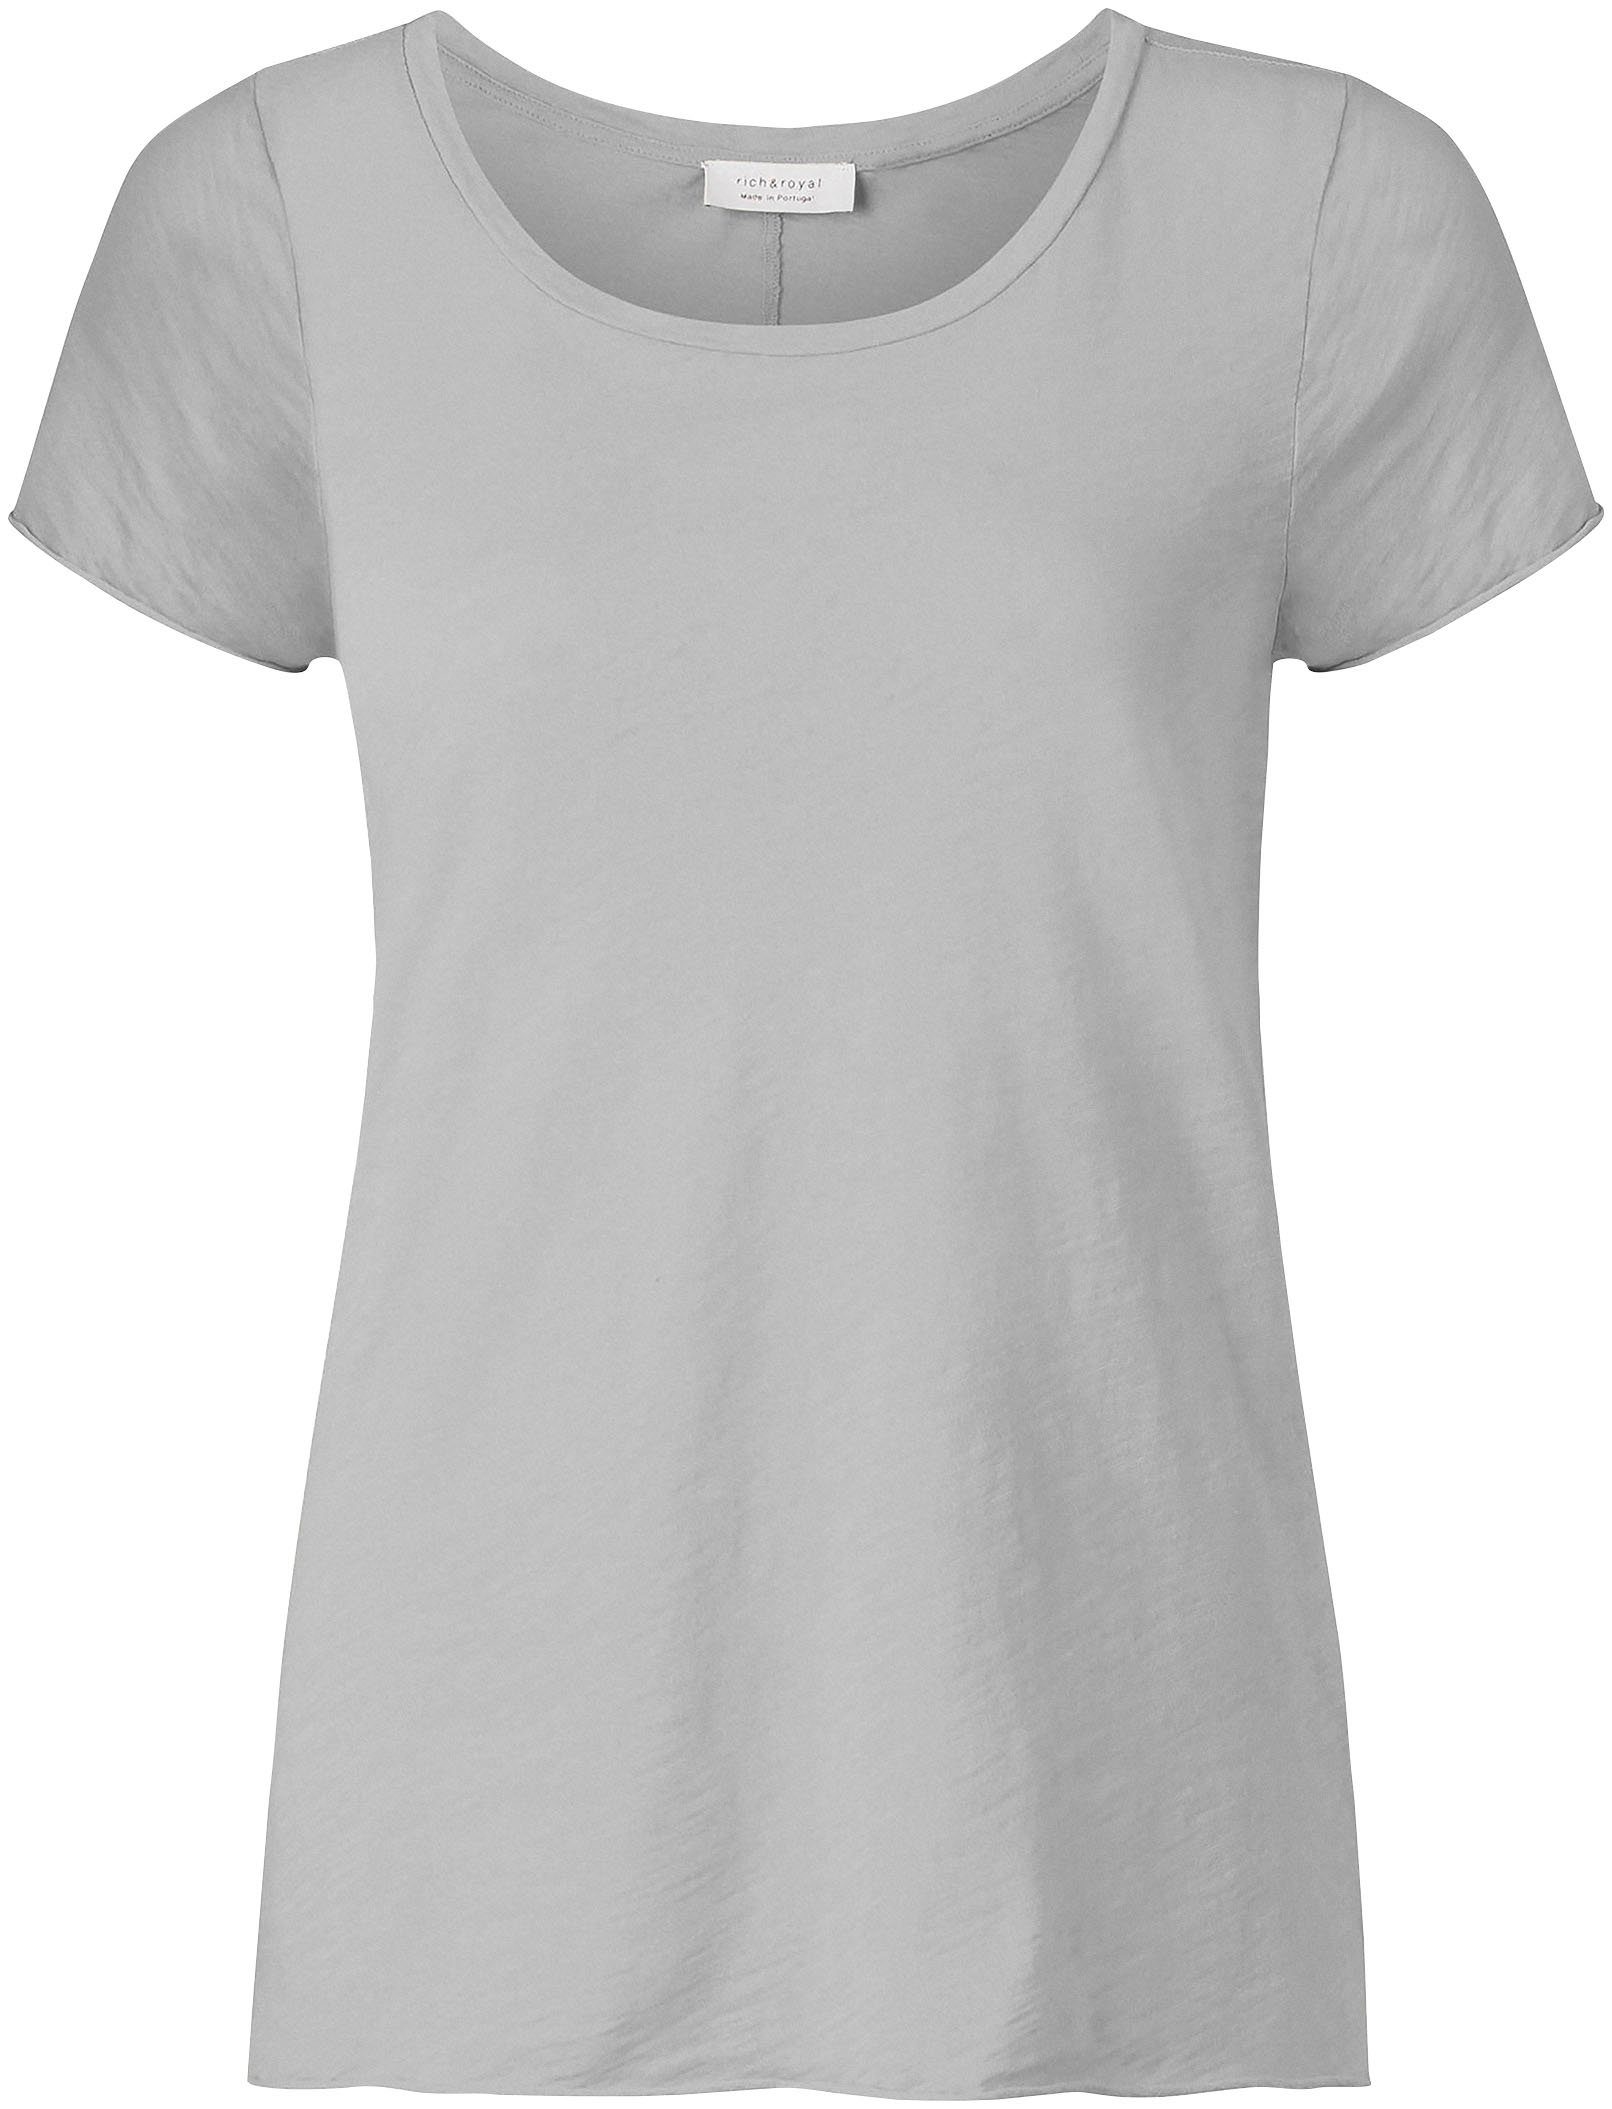 Rich & Royal T-Shirt in femininer Basic-Form melange grey